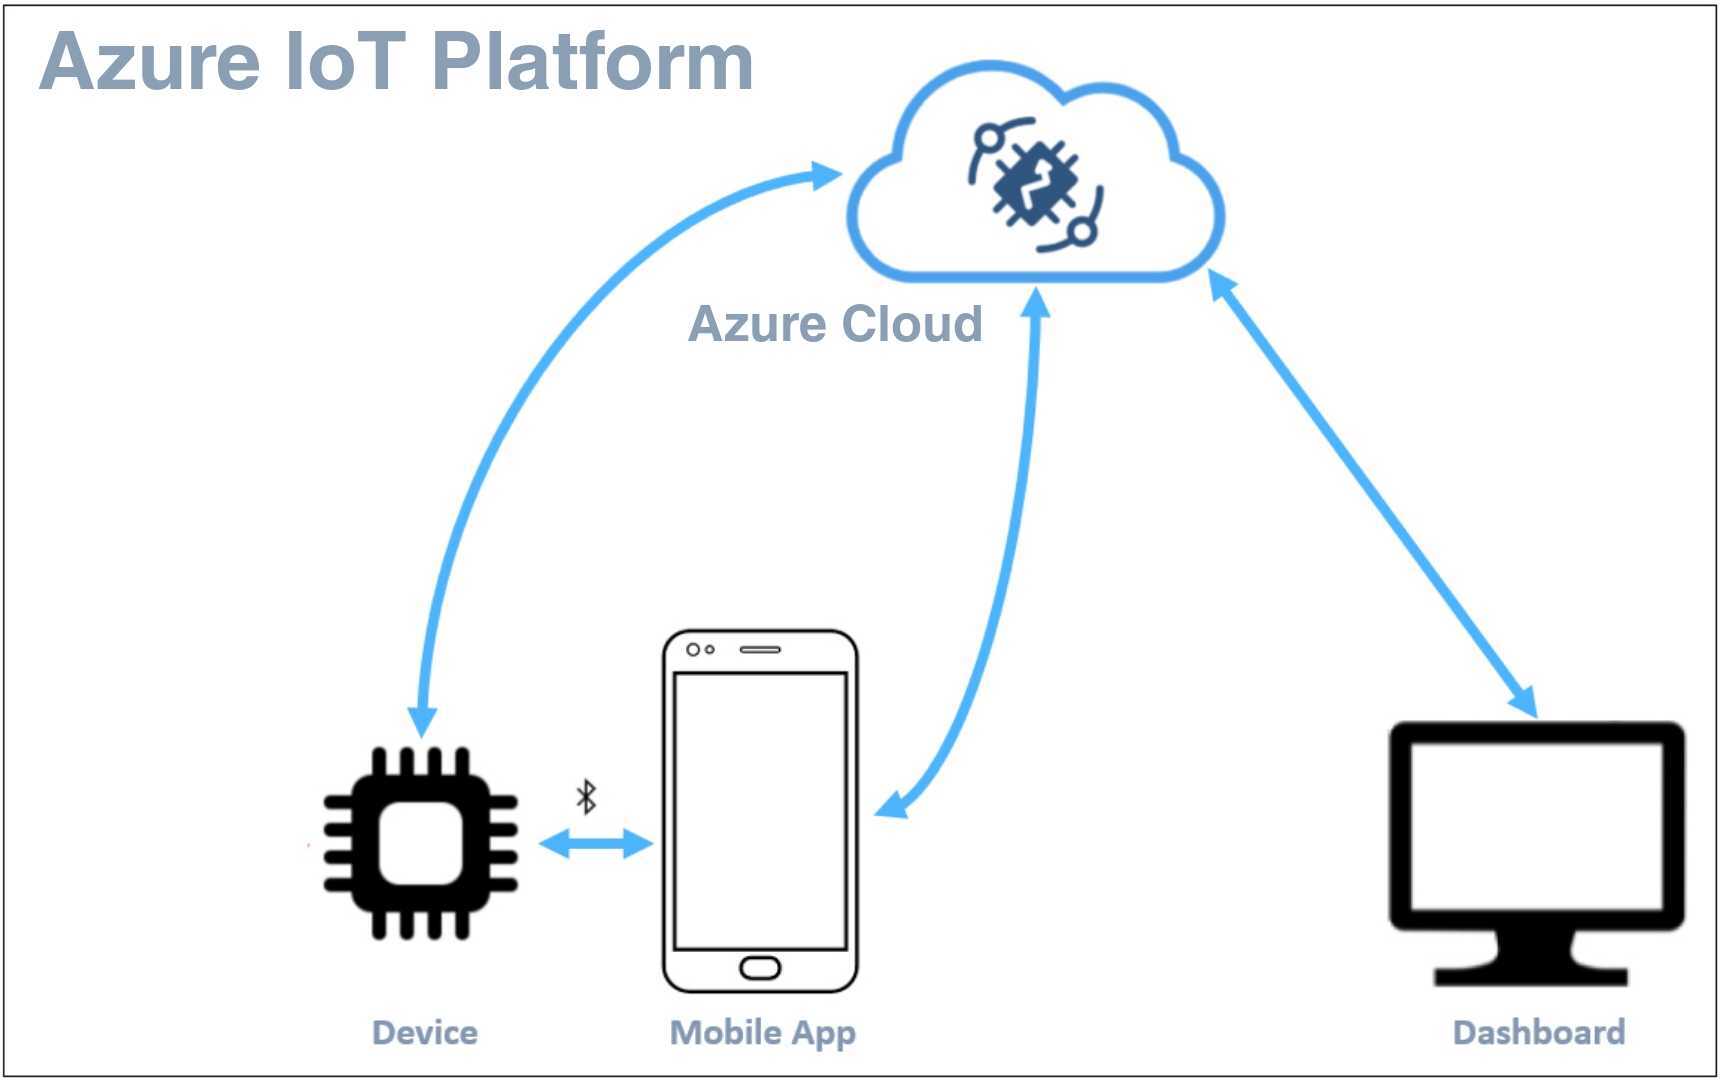 Azure IoT Platform